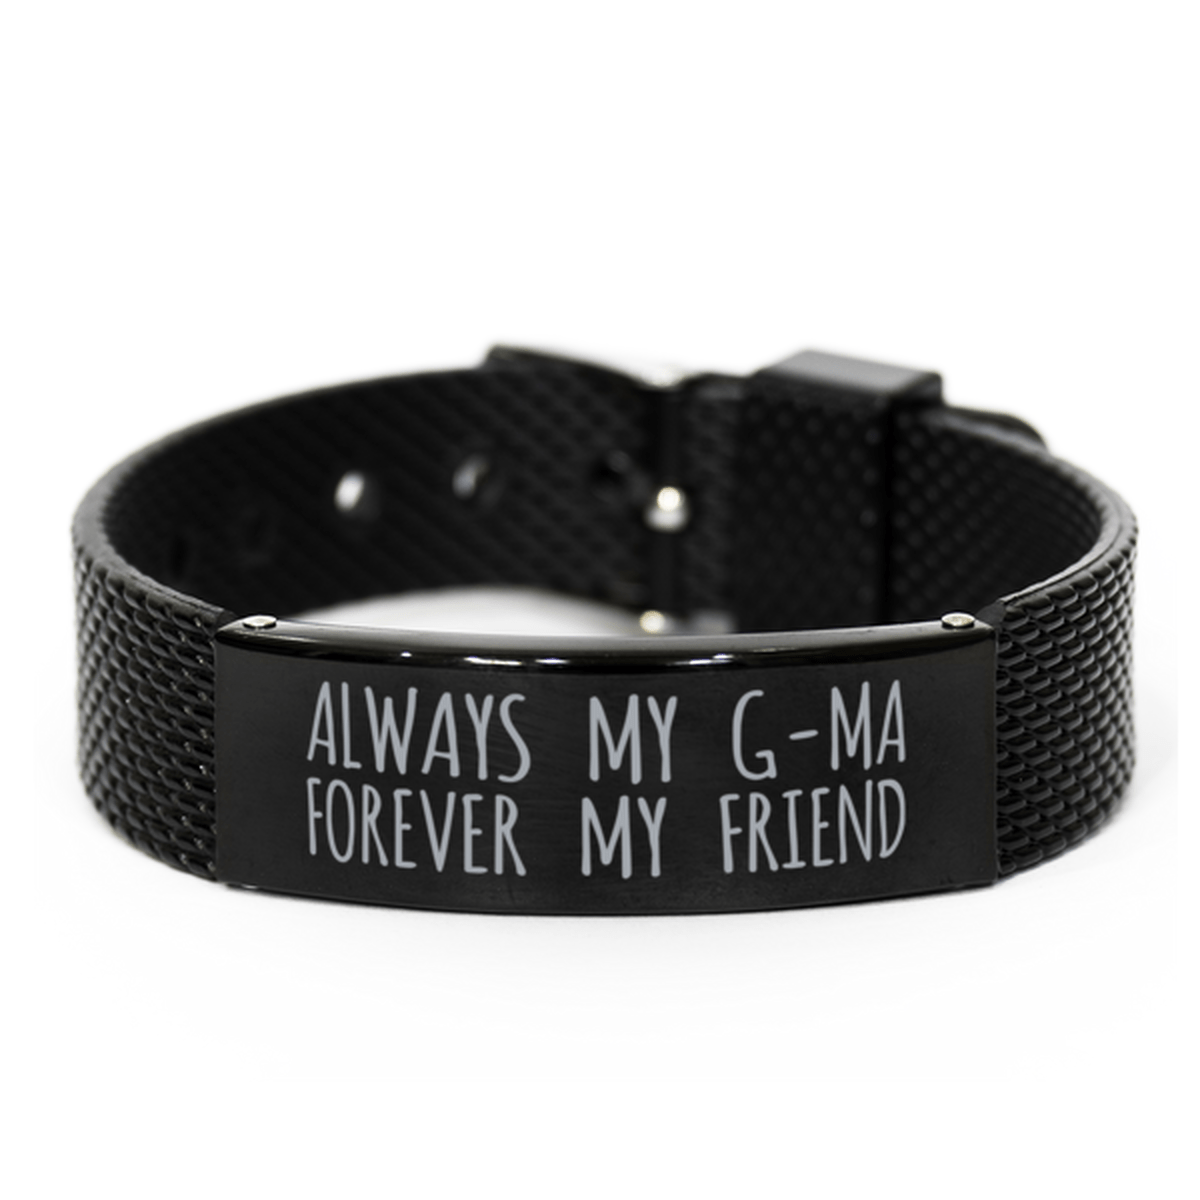 Inspirational G Ma Black Shark Mesh Bracelet, Always My G Ma Forever My Friend, Best Birthday Gifts for Family Friends